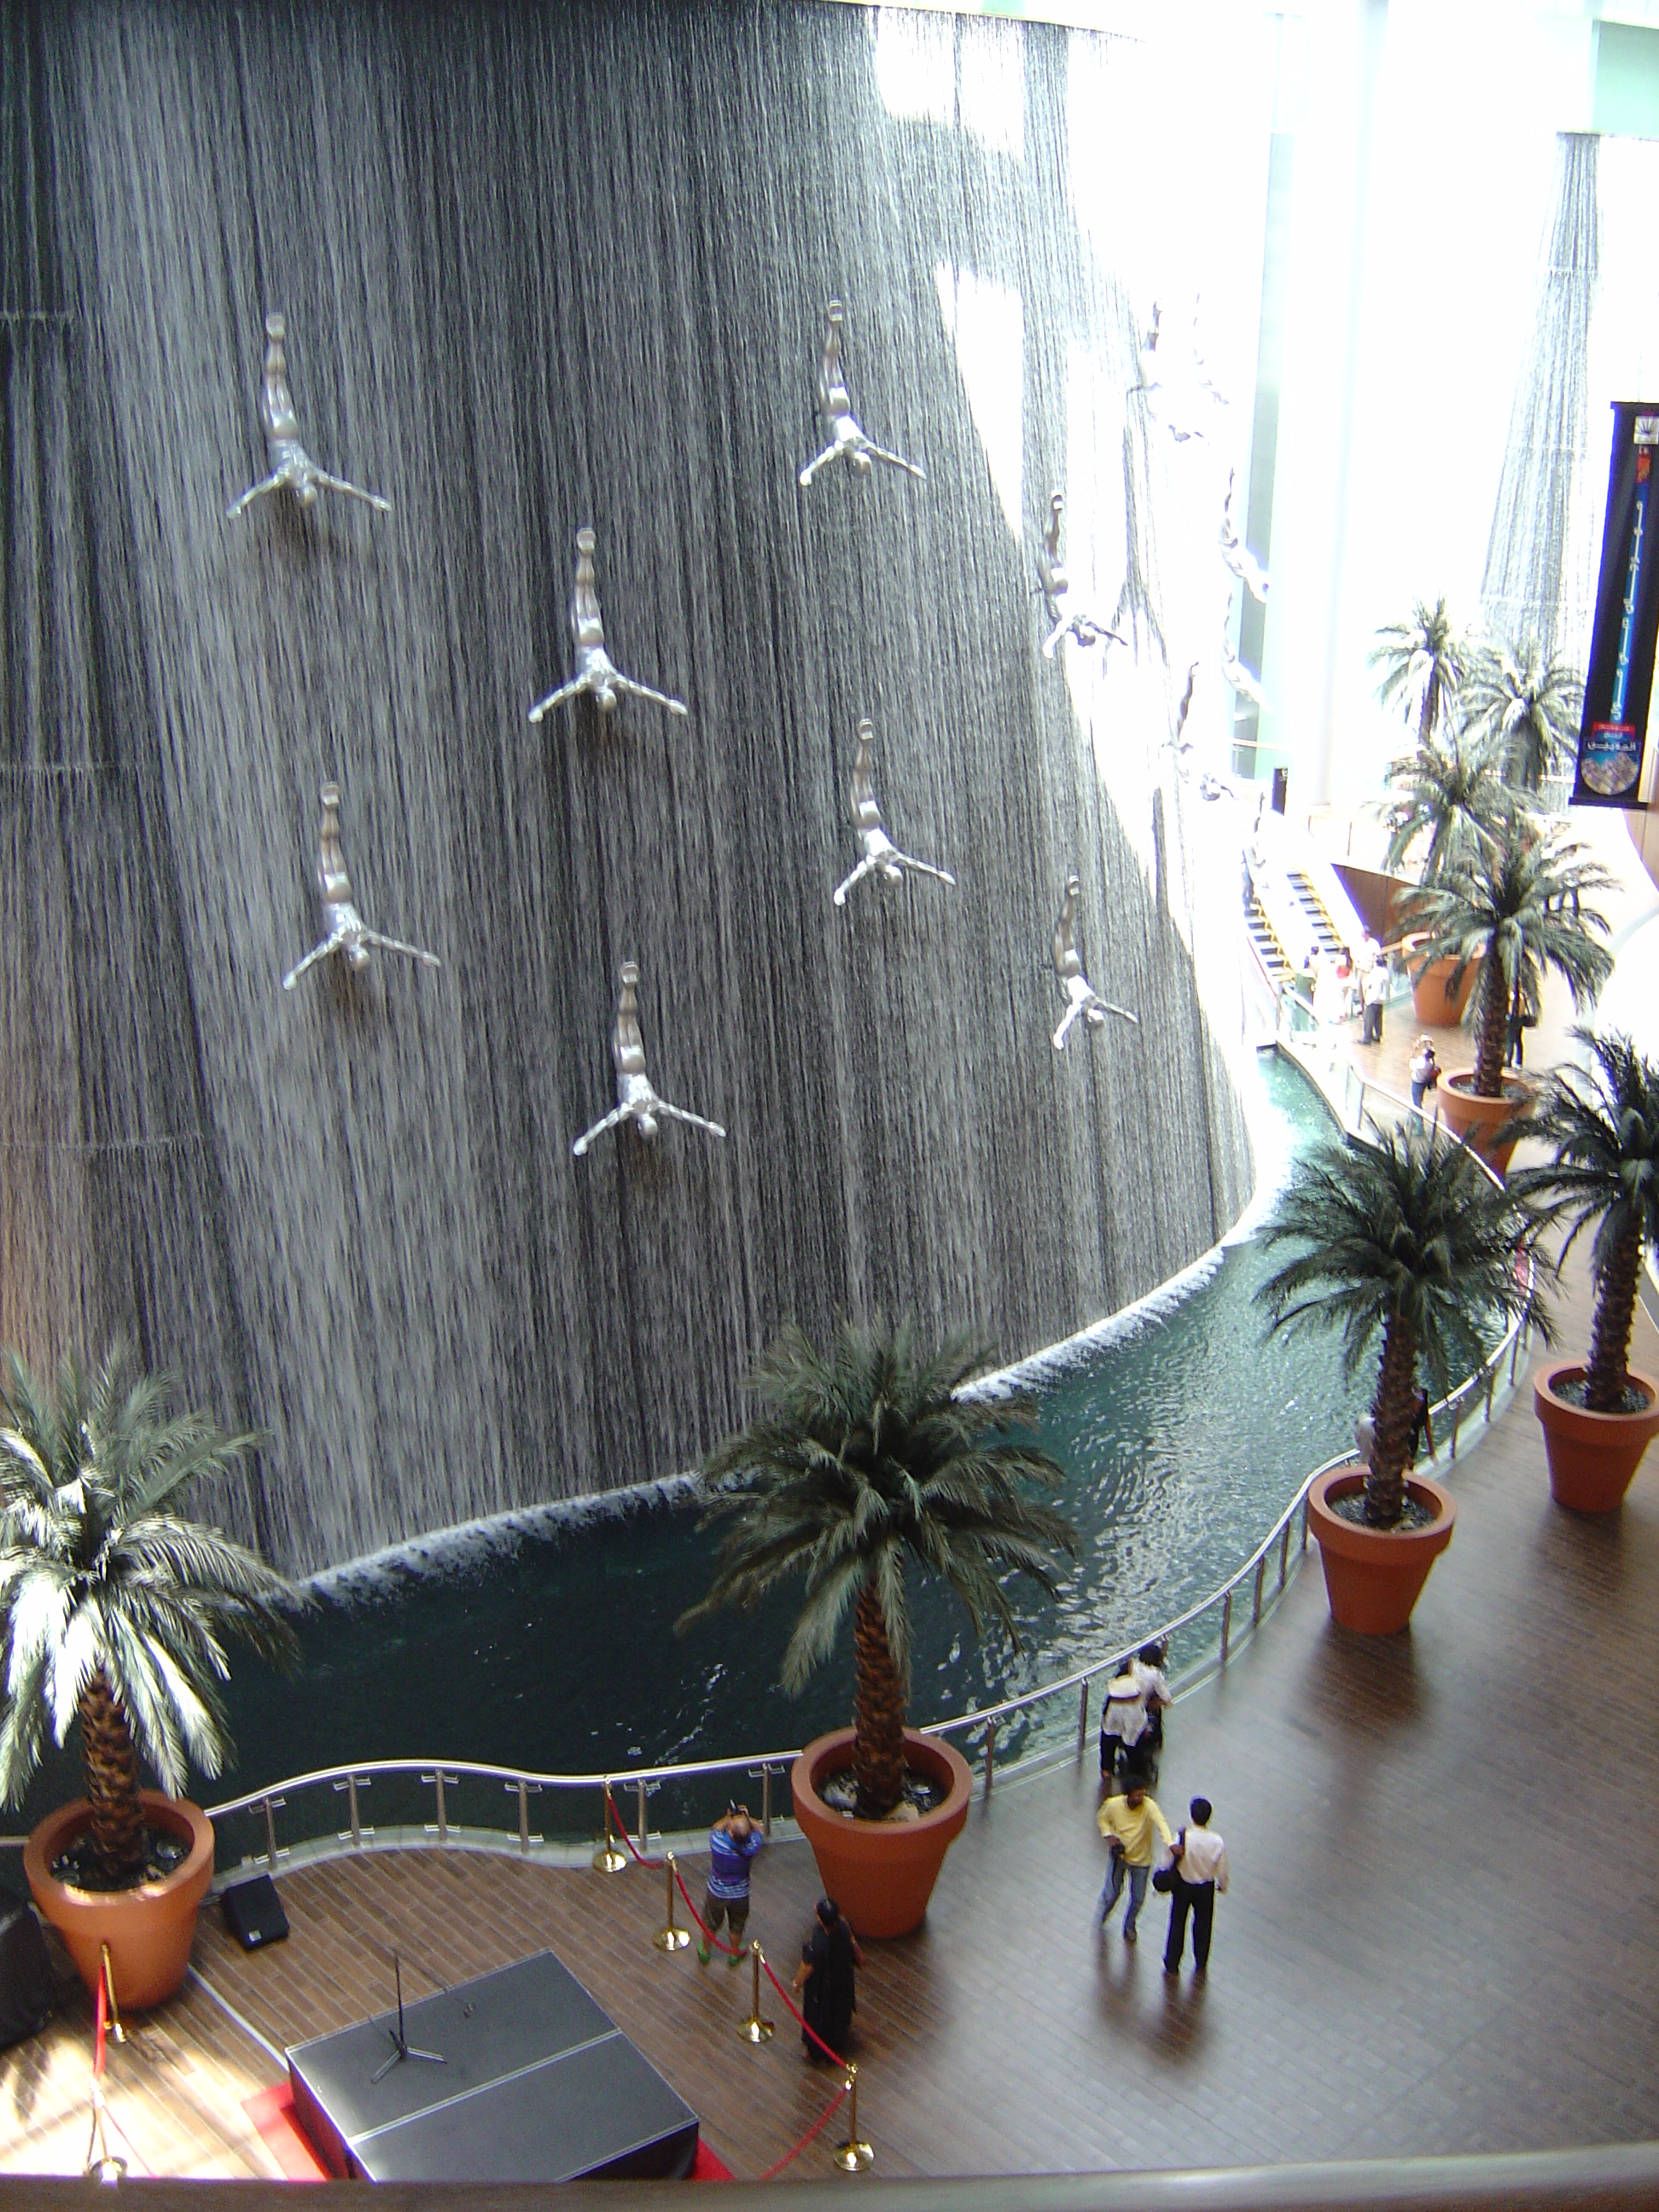 Dubai Mall Fountain Timings